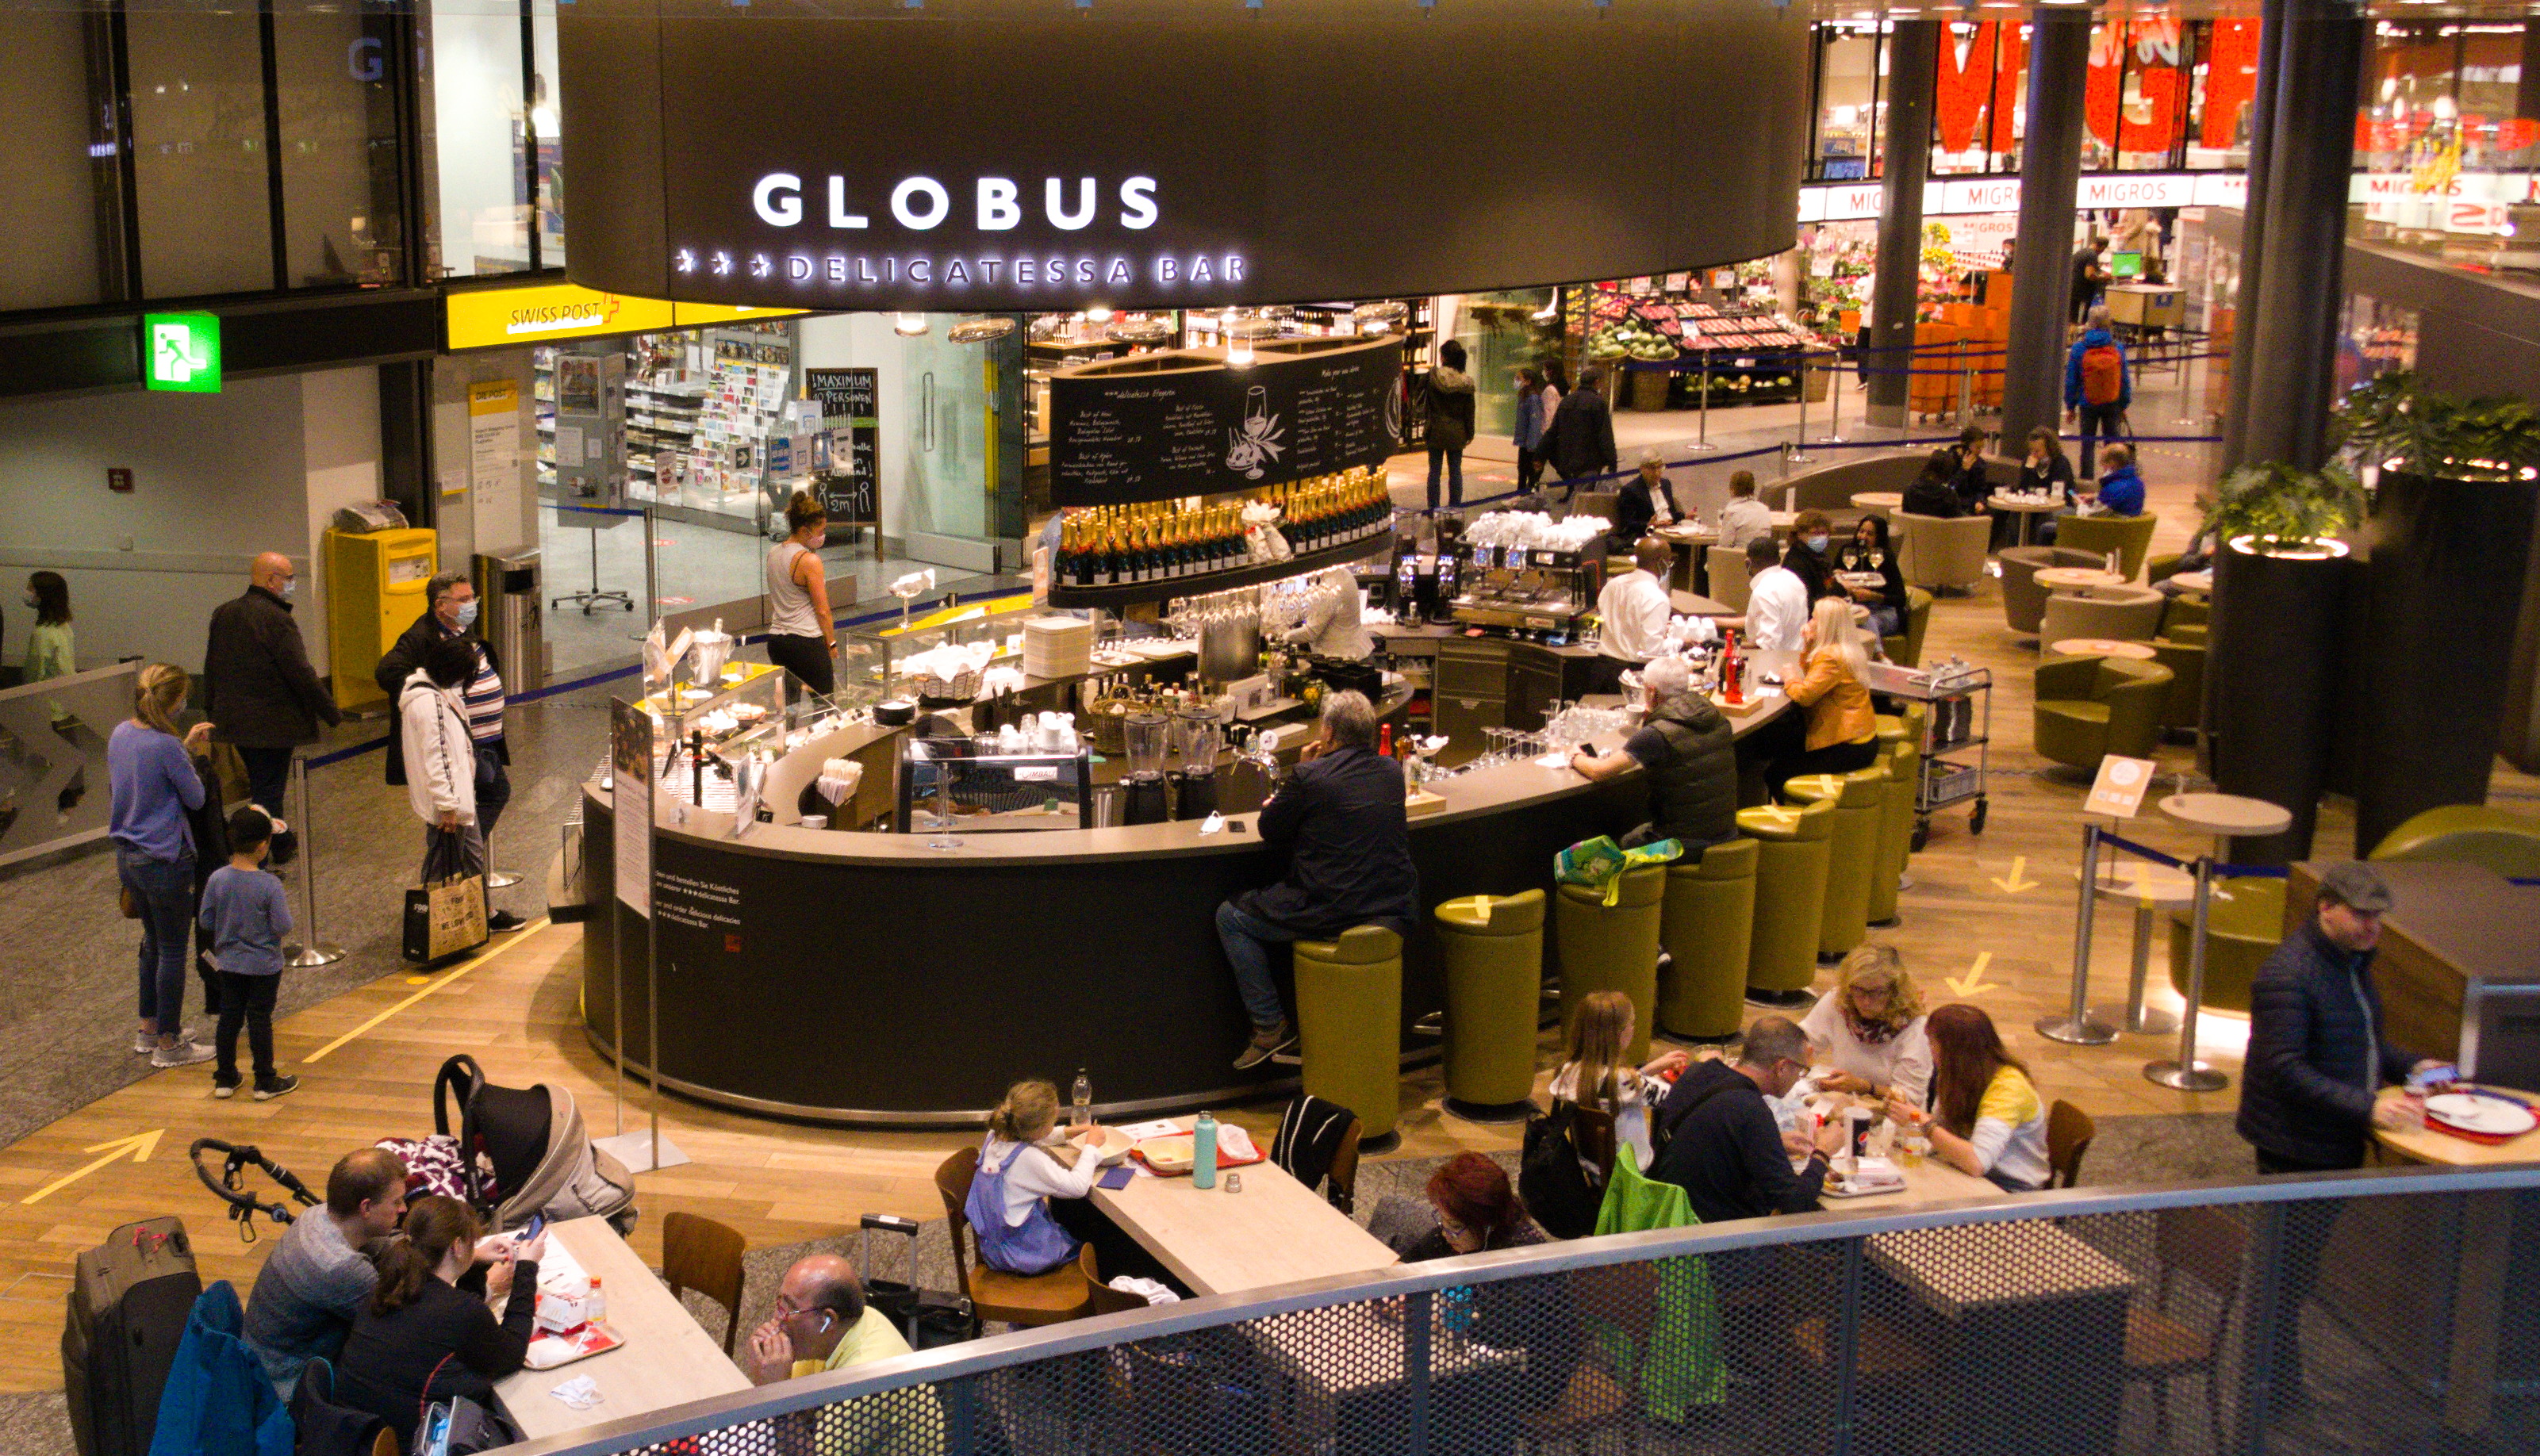 auroch falskhed deres File:Globus, Zurich.jpg - Wikimedia Commons